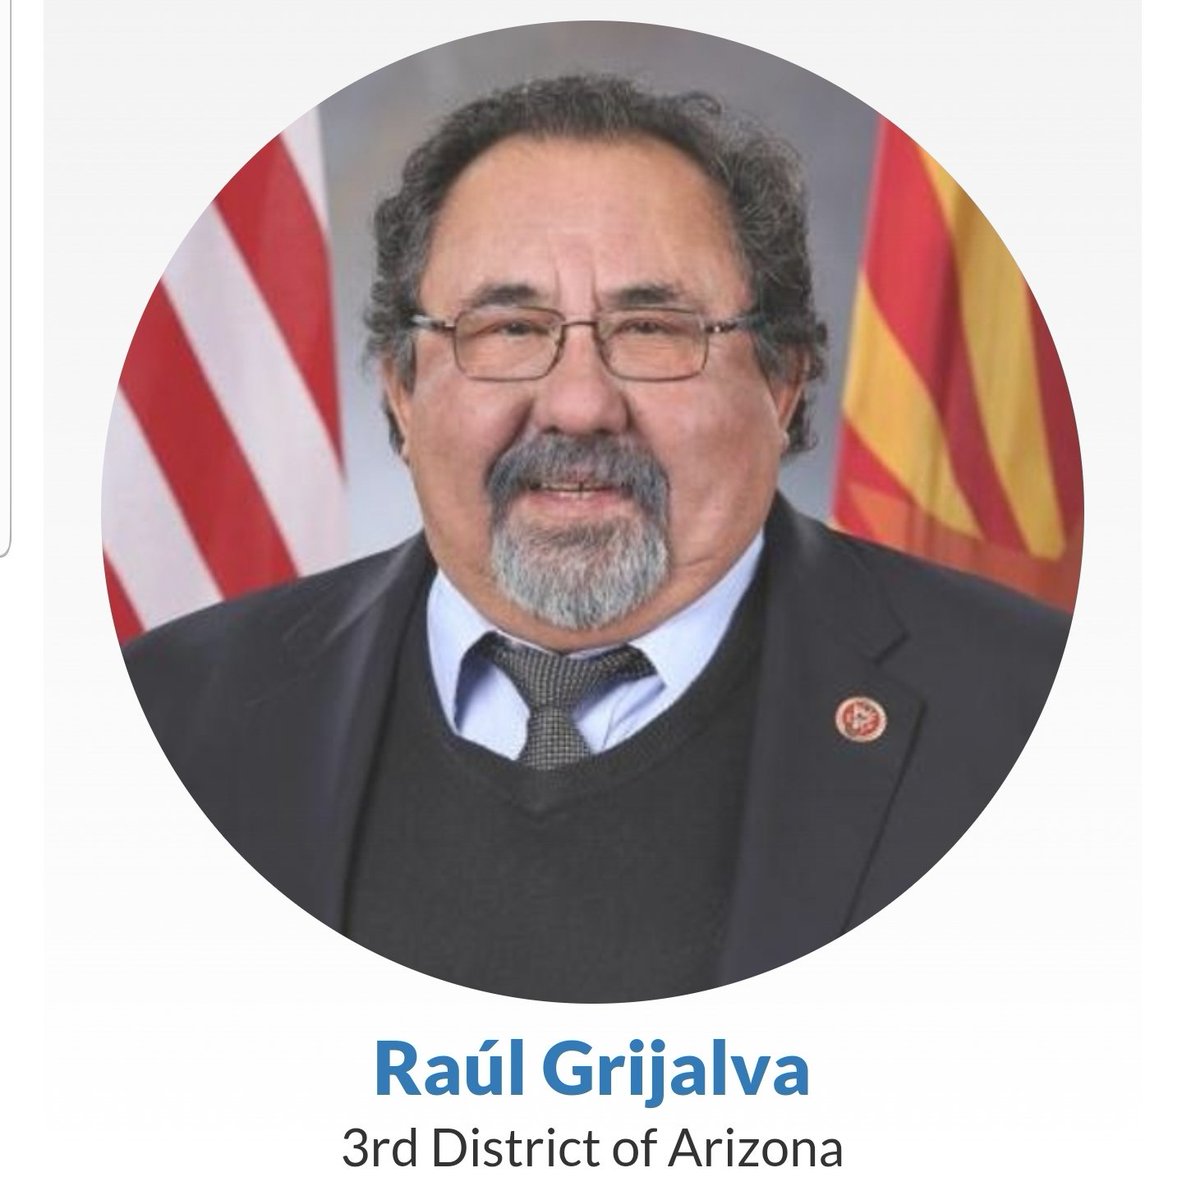 By state, alphabetically, they are:Raúl Grijalva, Arizona's 3rd District https://grijalva.house.gov 2/98